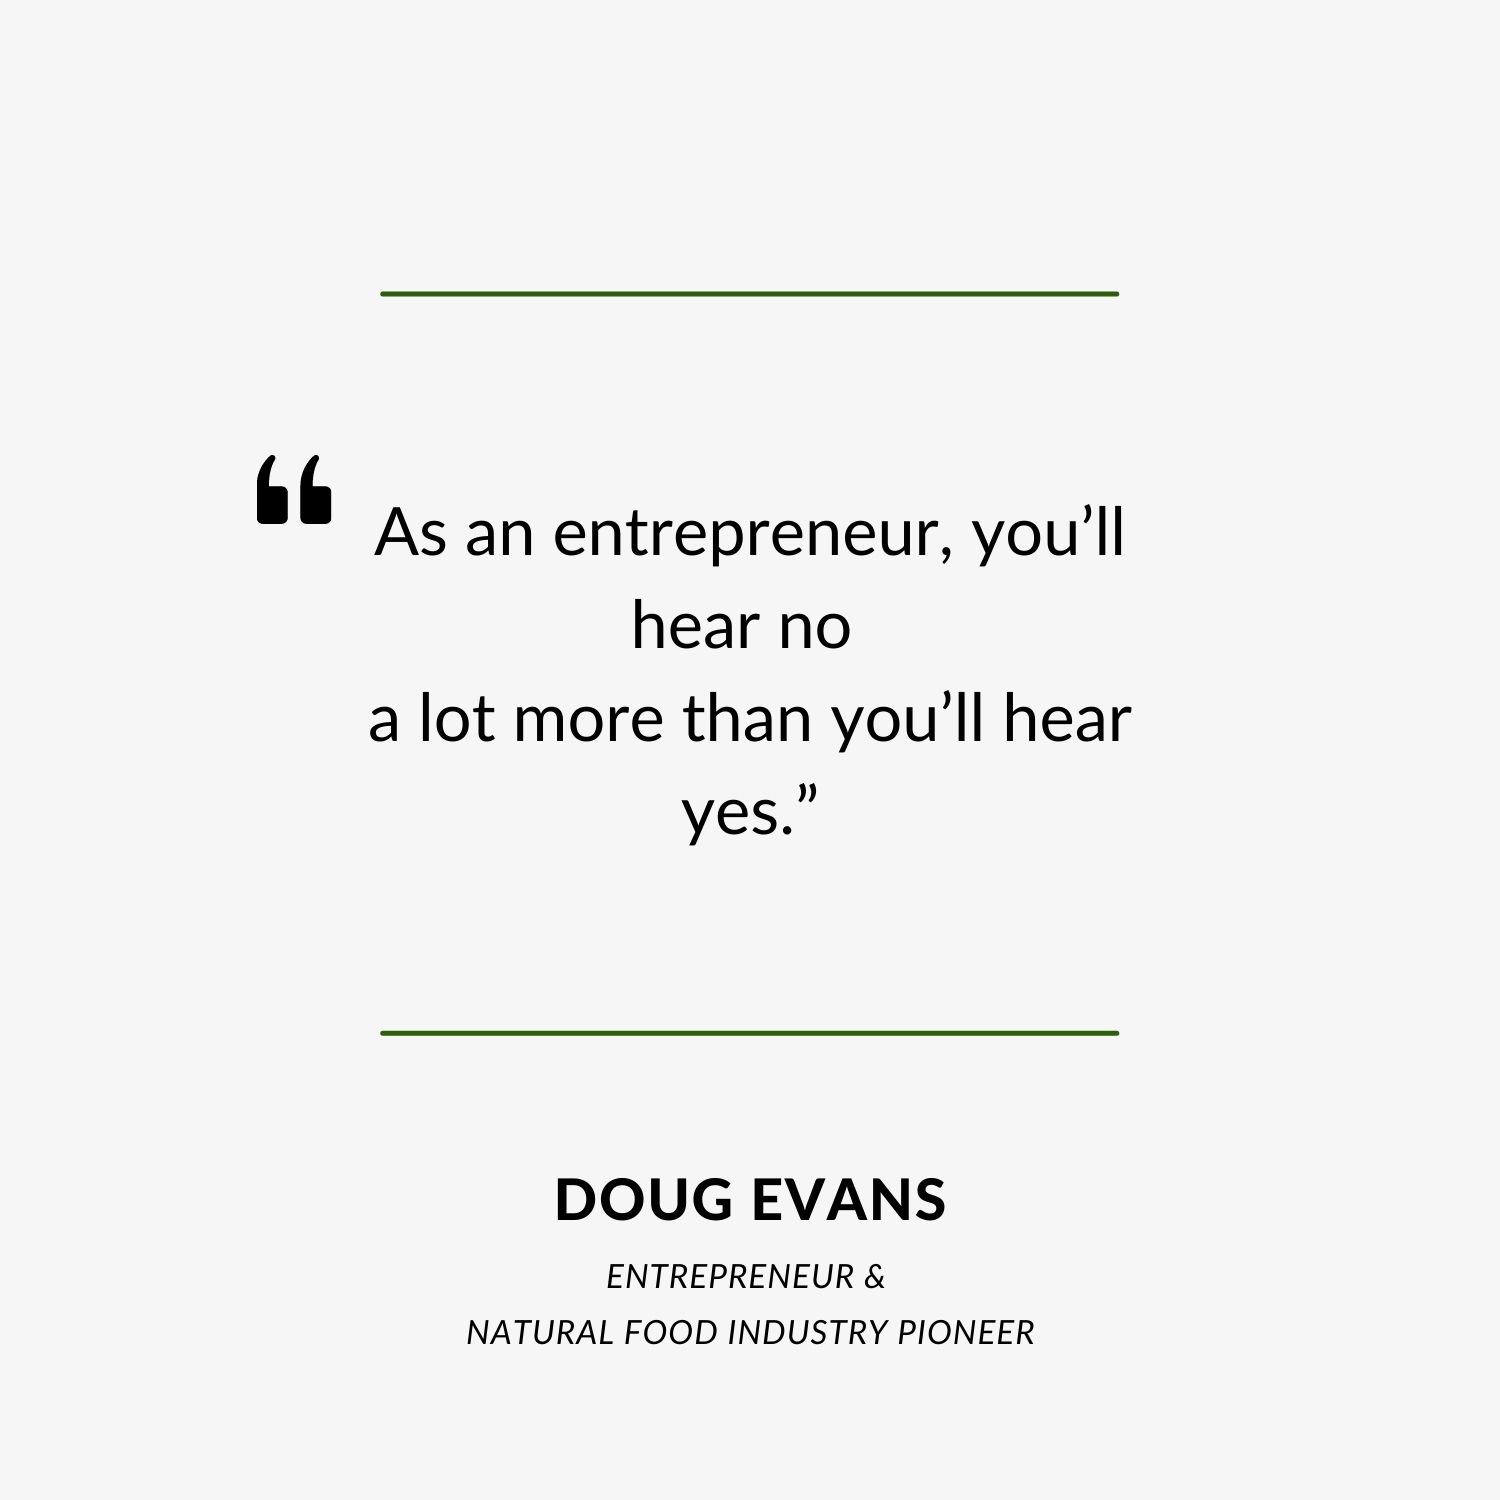 “As an entrepreneur, you’ll hear no a lot more than you’ll hear yes.” - Doug Evans